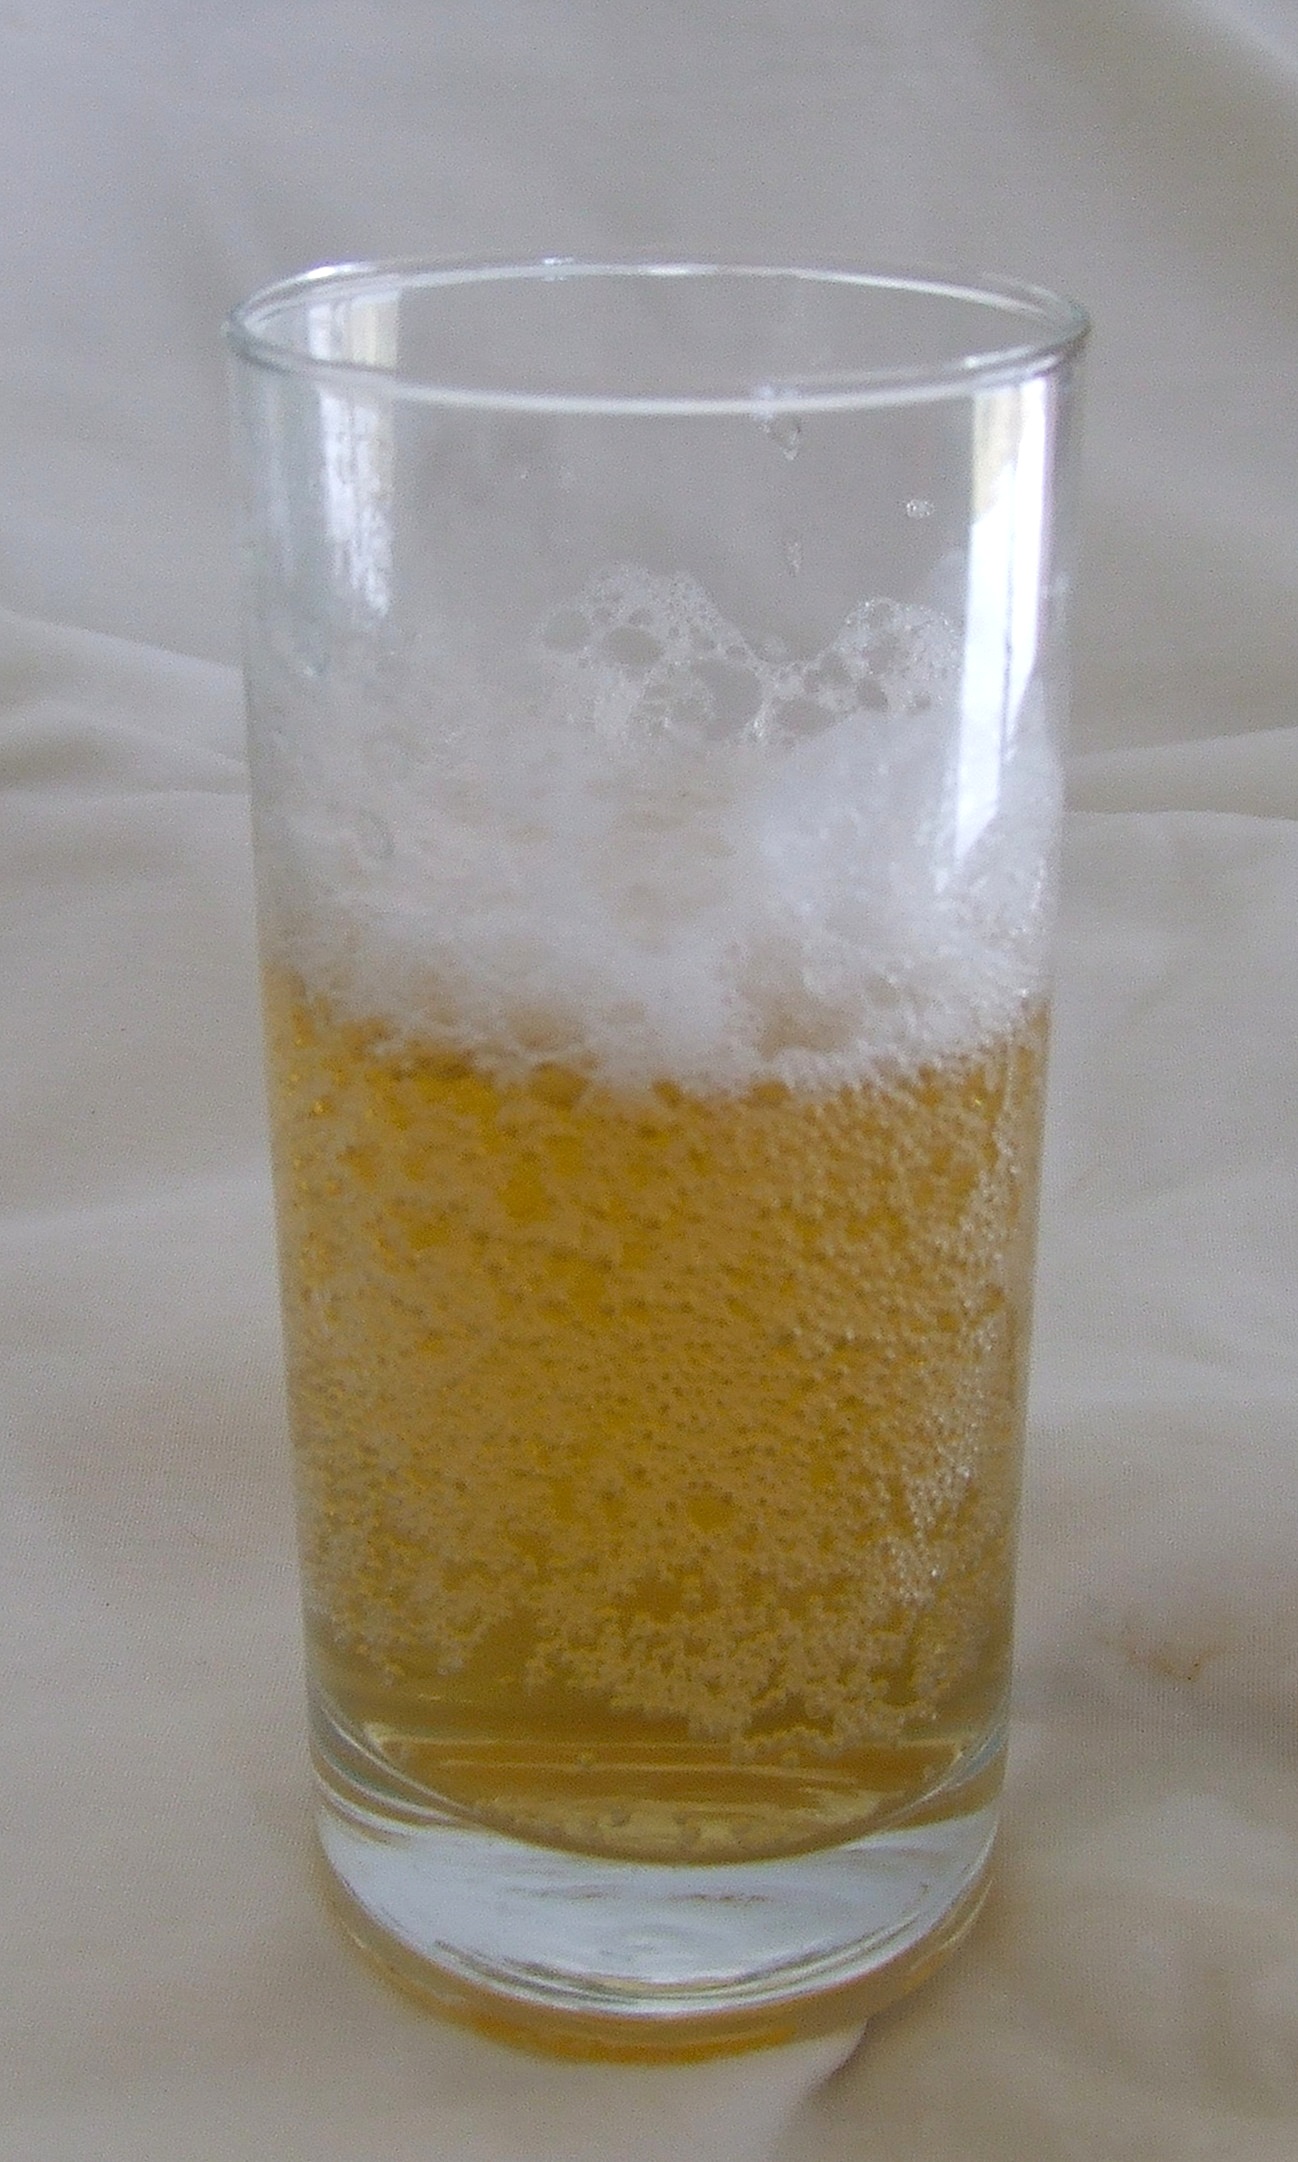 Copo com Kombuchua, uma bebida probiótica